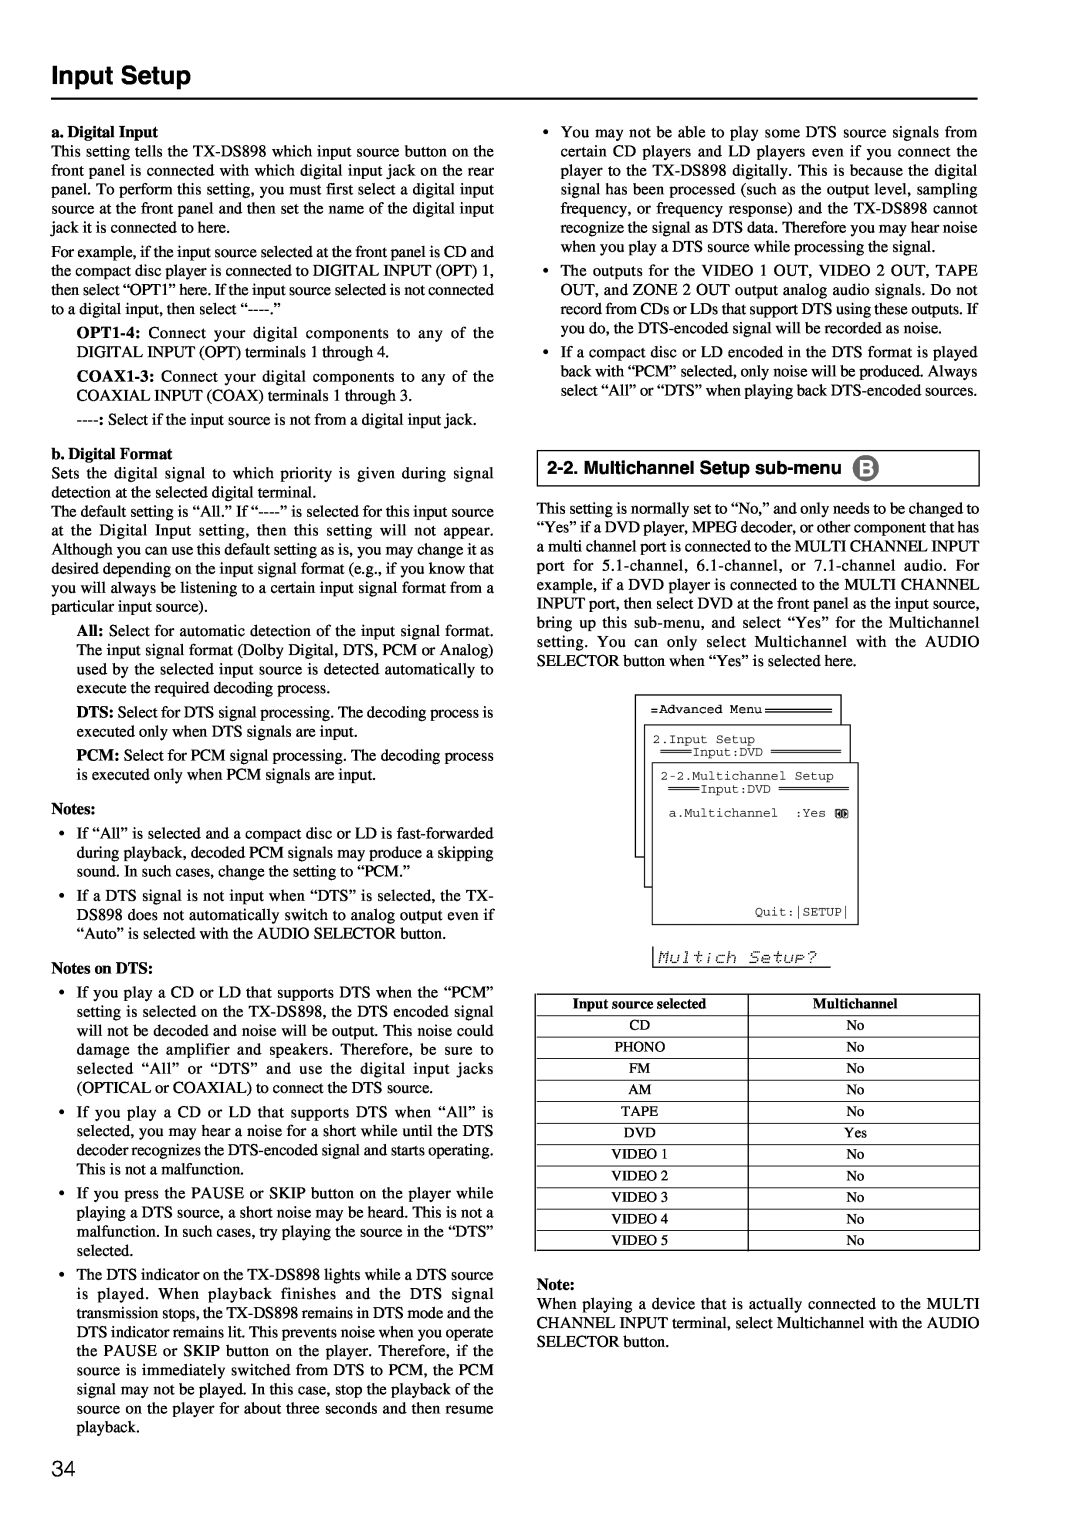 Onkyo TX-DS898 instruction manual Input Setup, Multichannel Setup sub-menu 